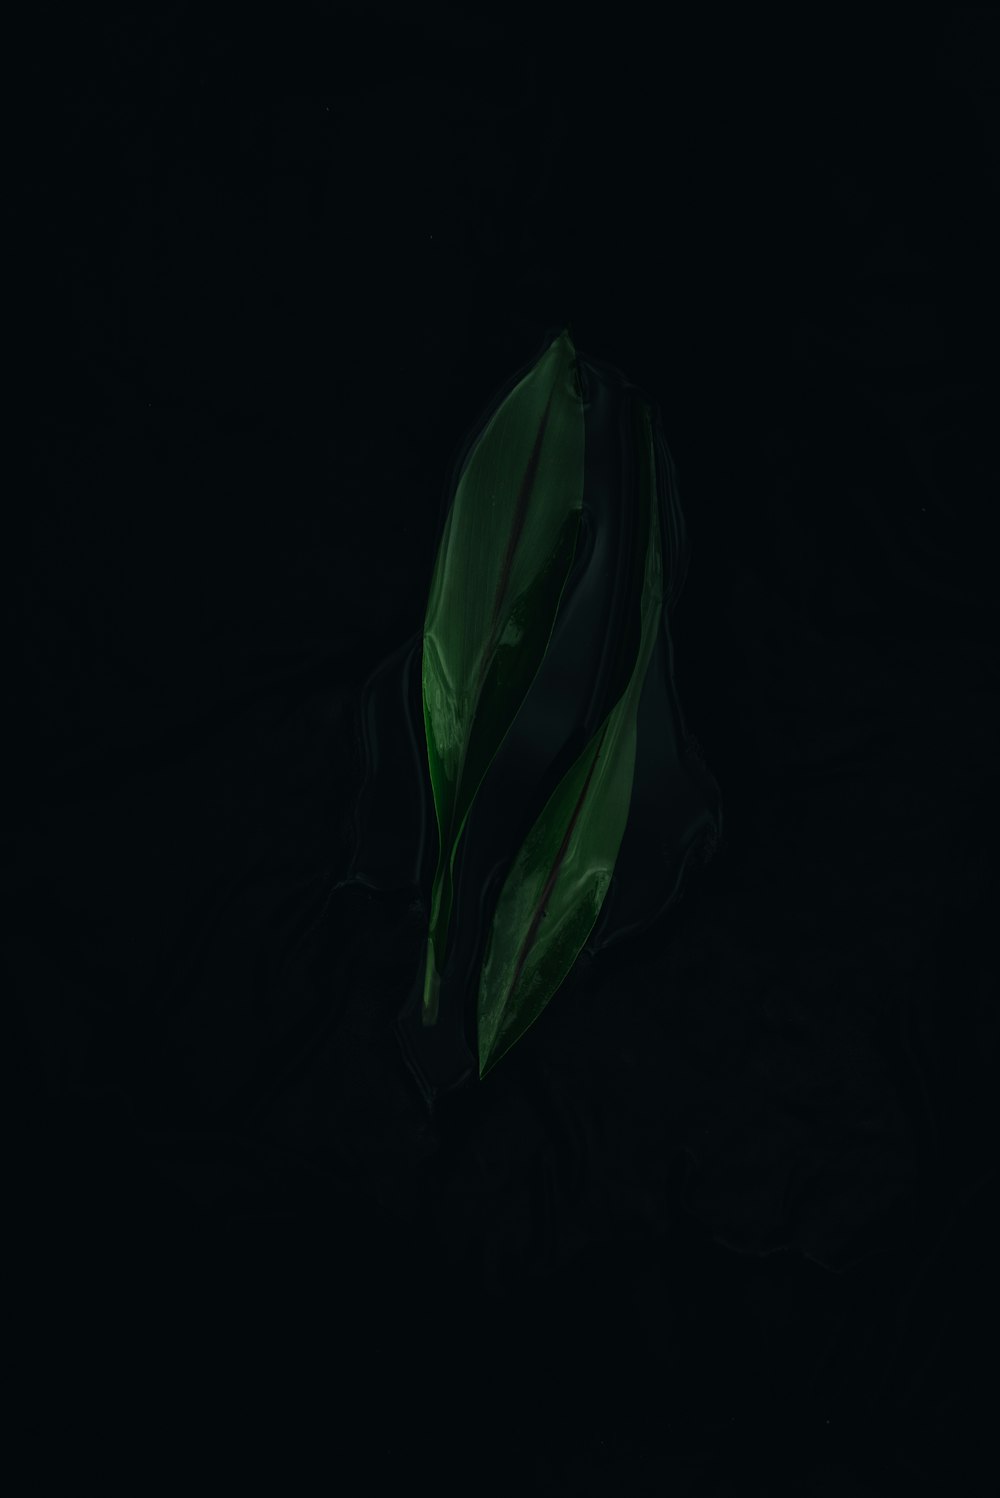 a green leaf on a black background